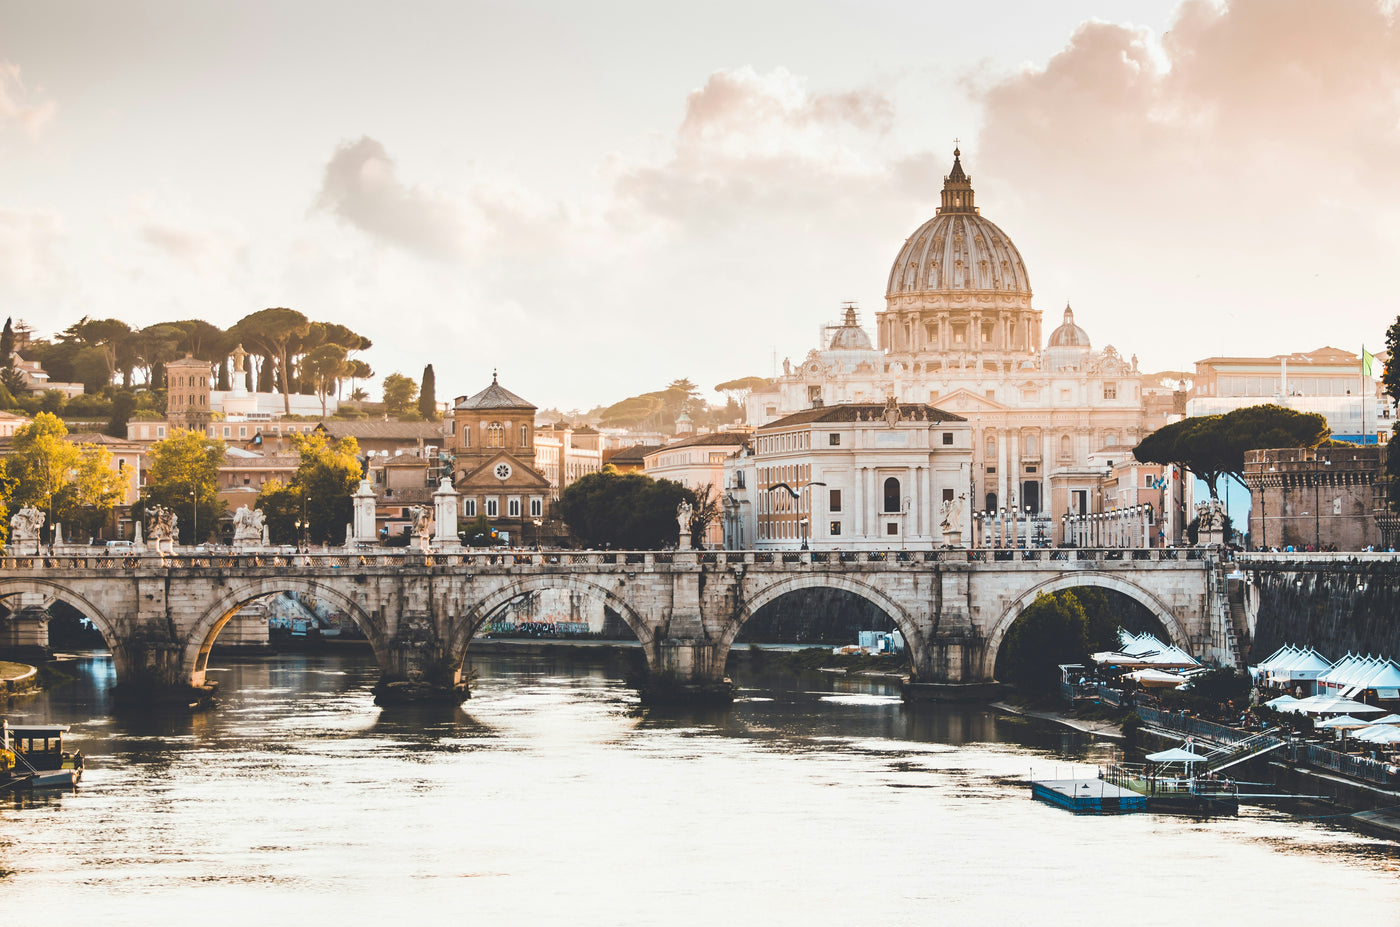 The Vatican City at the Heart of Rome - Photo by Chris Czermak on Unsplash unsplash.com/@chris_czermak